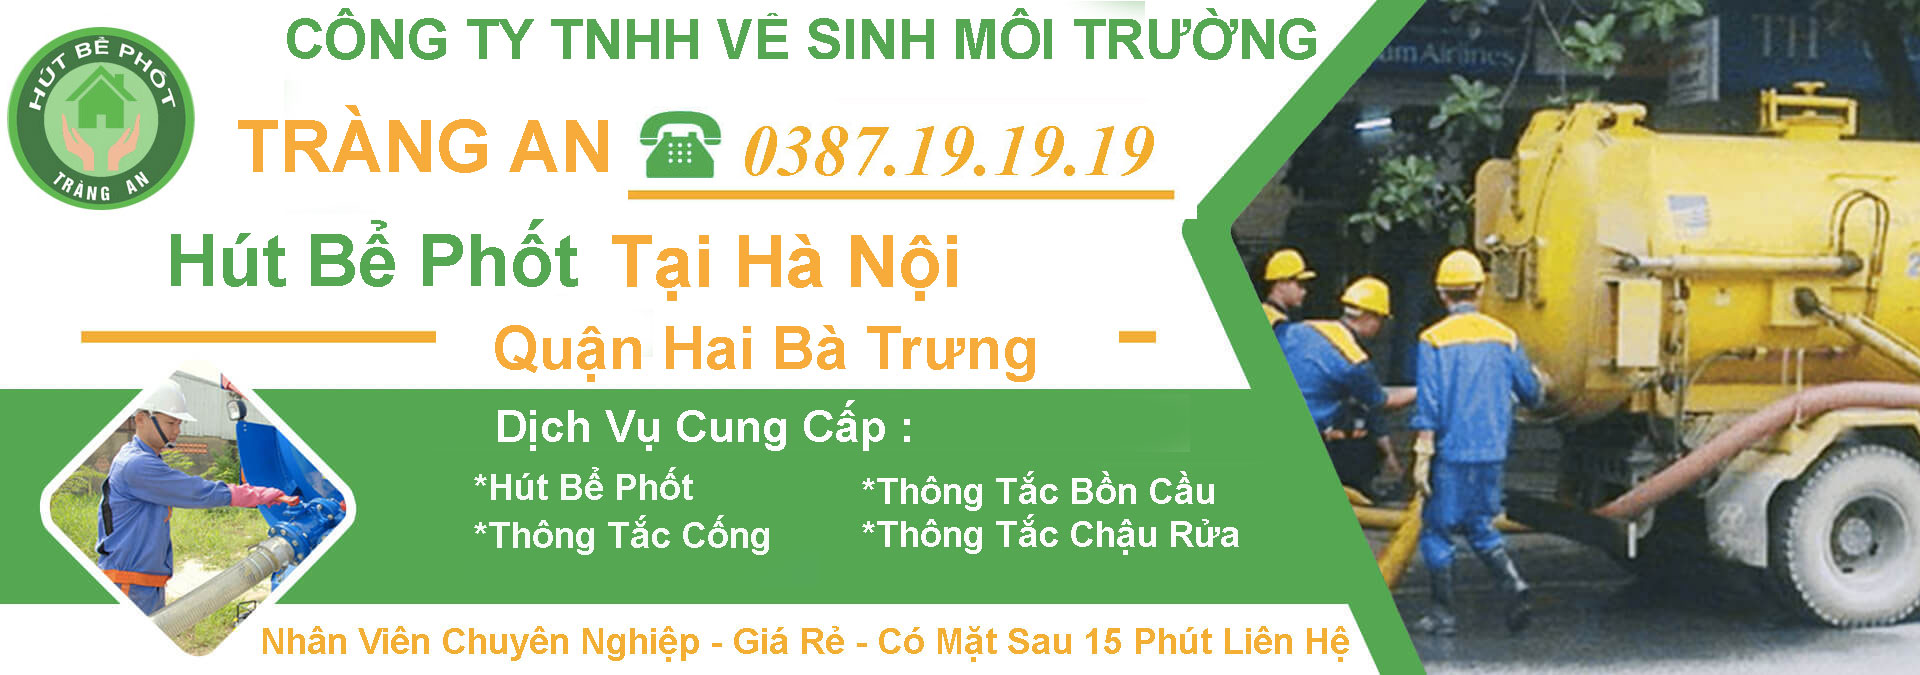 Thong Tac Cong Ha Noi Hai Ba Trung